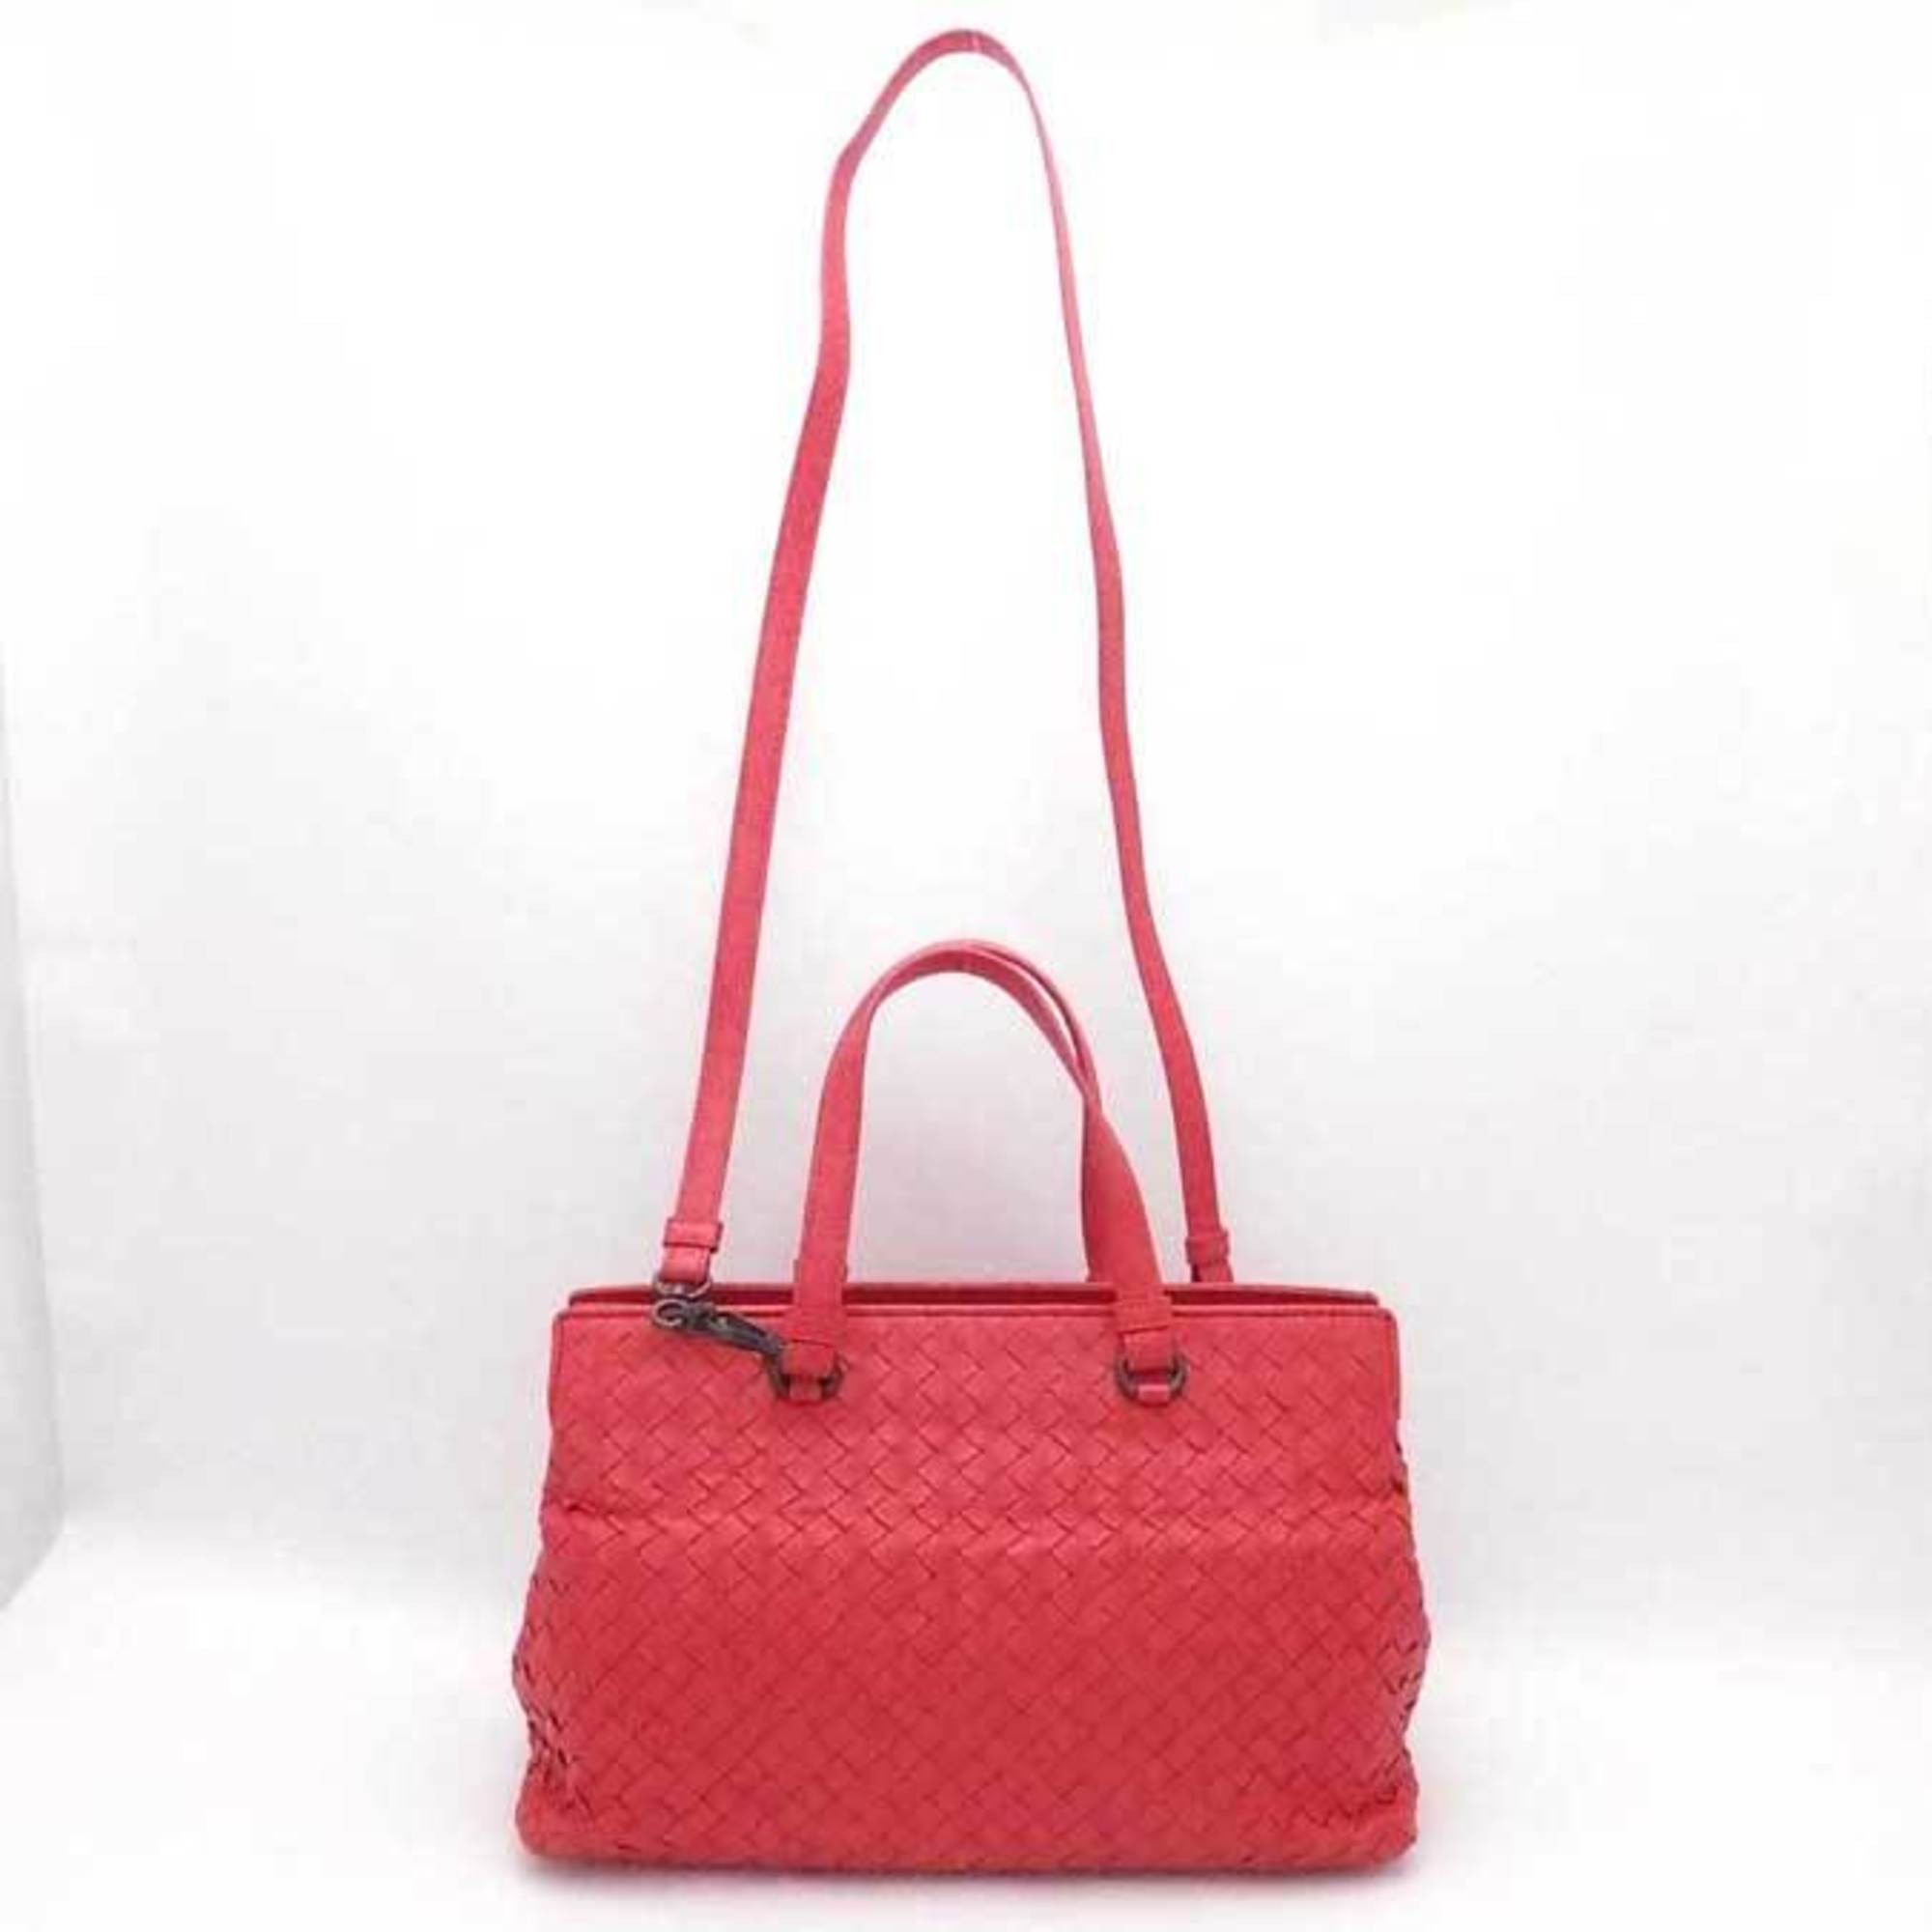 Bottega Veneta BOTTEGAVENETA handbag shoulder bag intrecciato leather red ladies